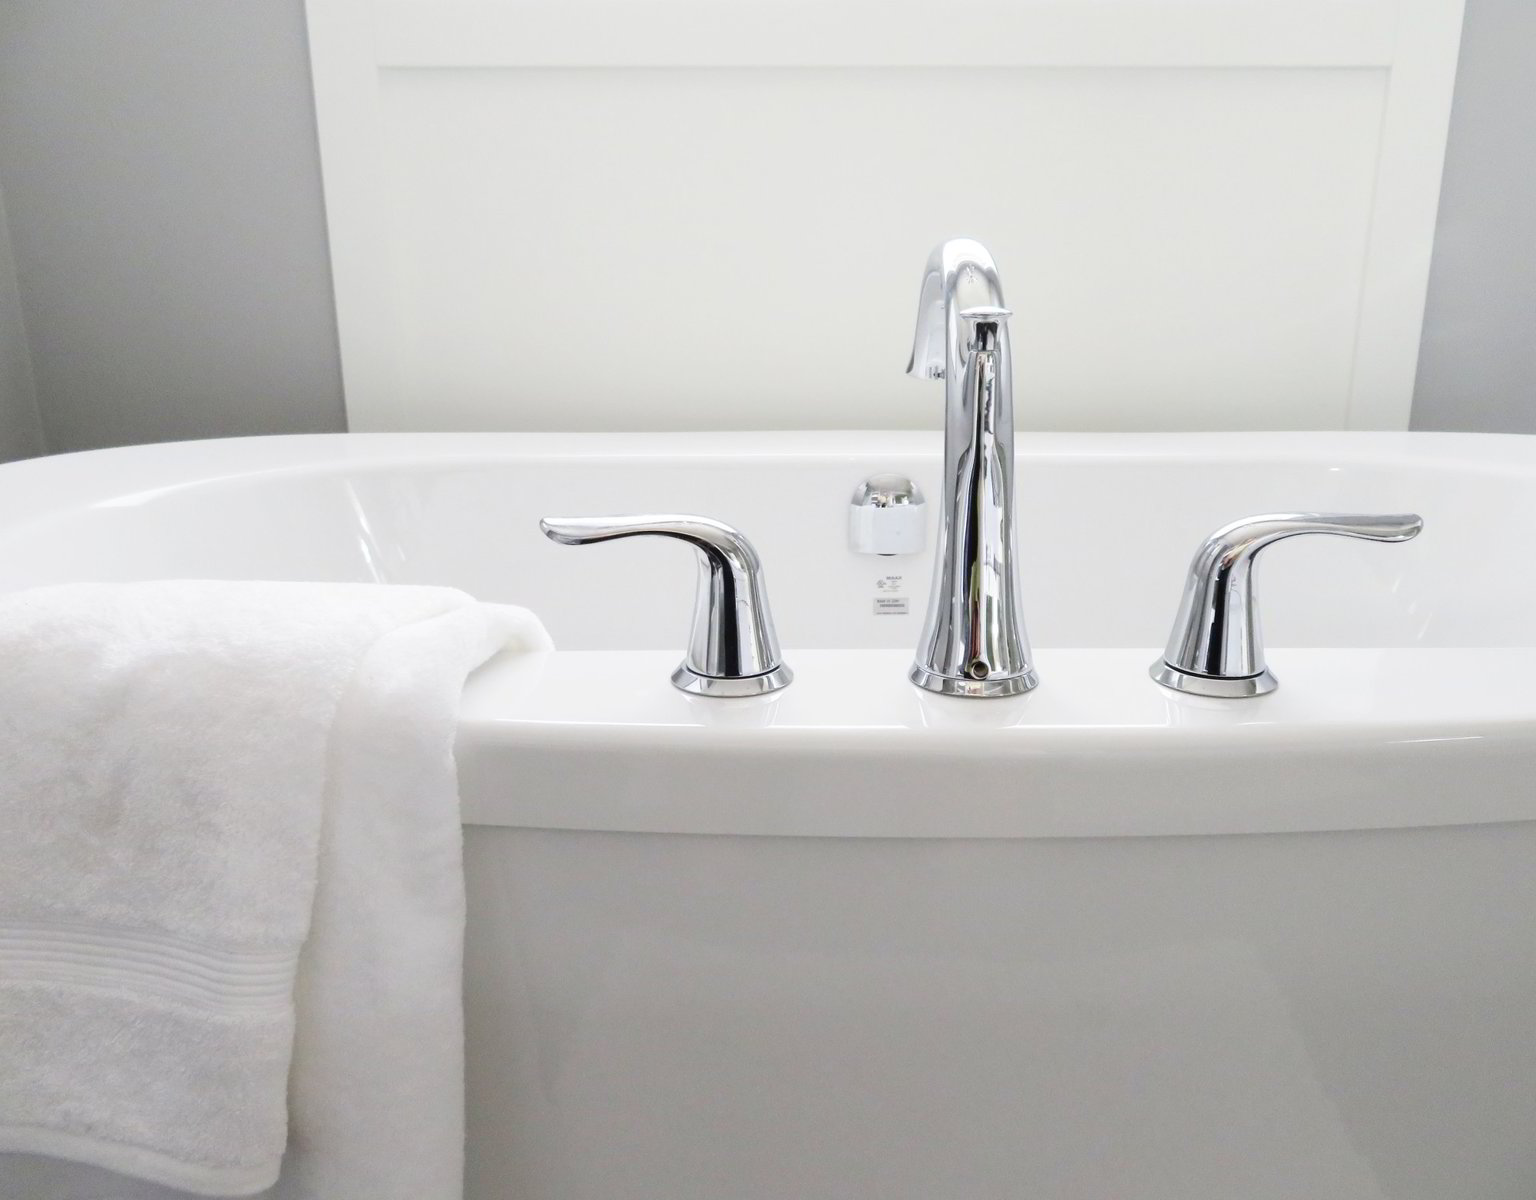 How To Fix A Leaky Bathtub Faucet, Bathtub Spigot Leak